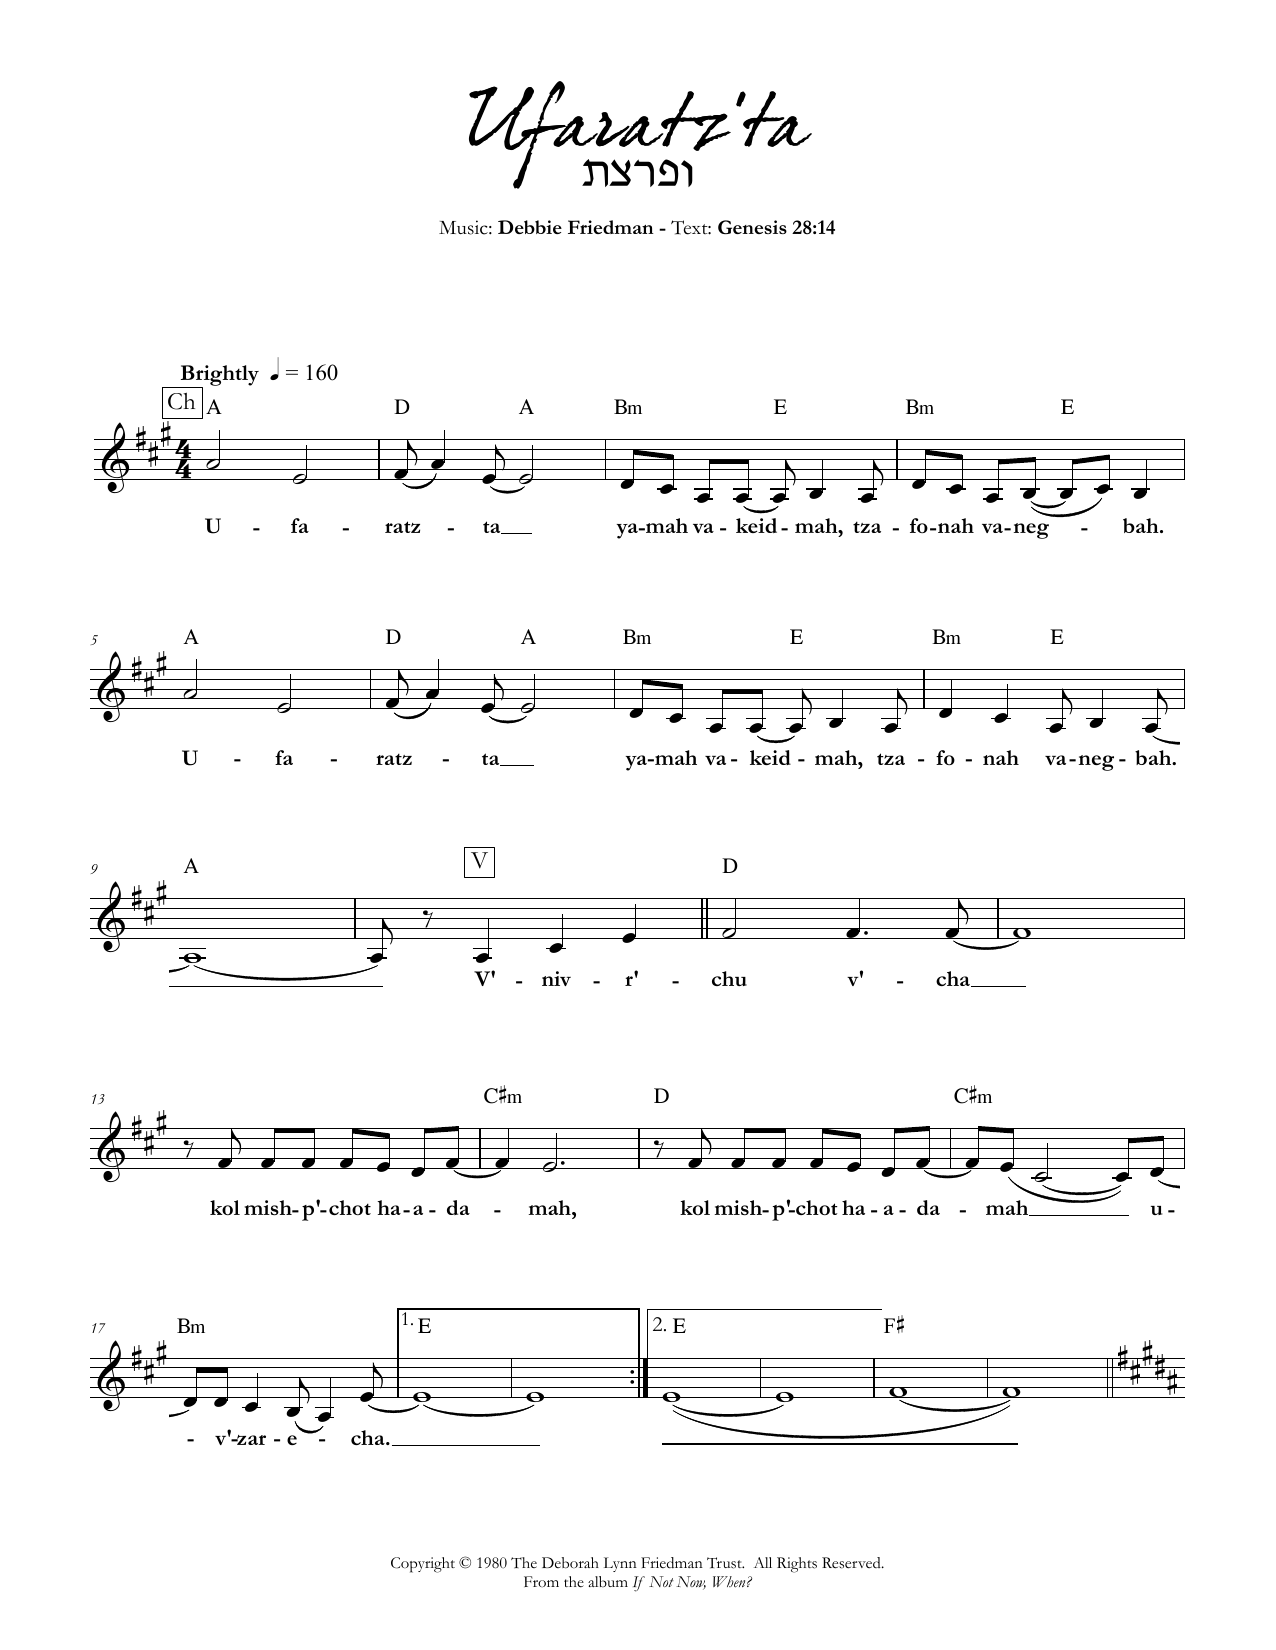 Debbie Friedman Ufaratz'ta sheet music notes and chords arranged for Lead Sheet / Fake Book